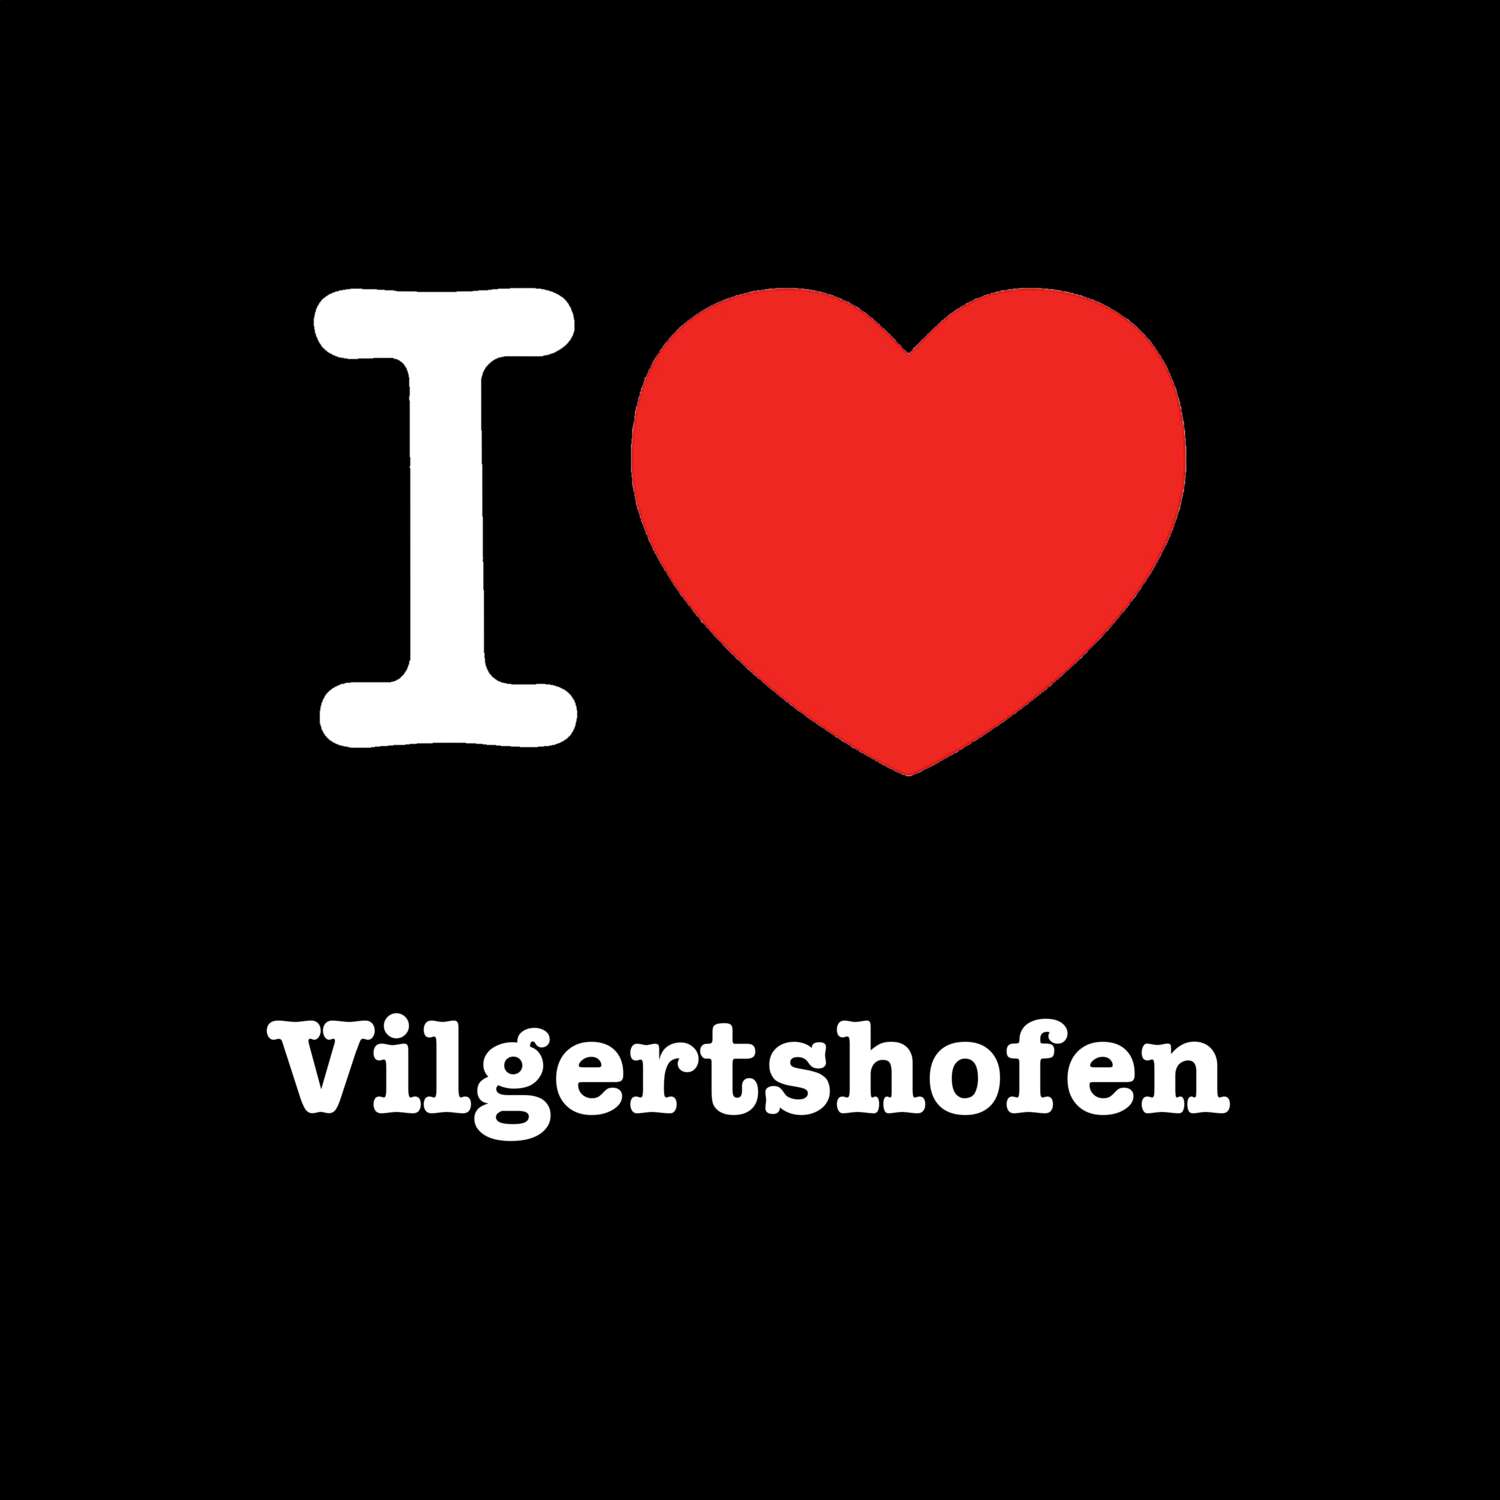 Vilgertshofen T-Shirt »I love«